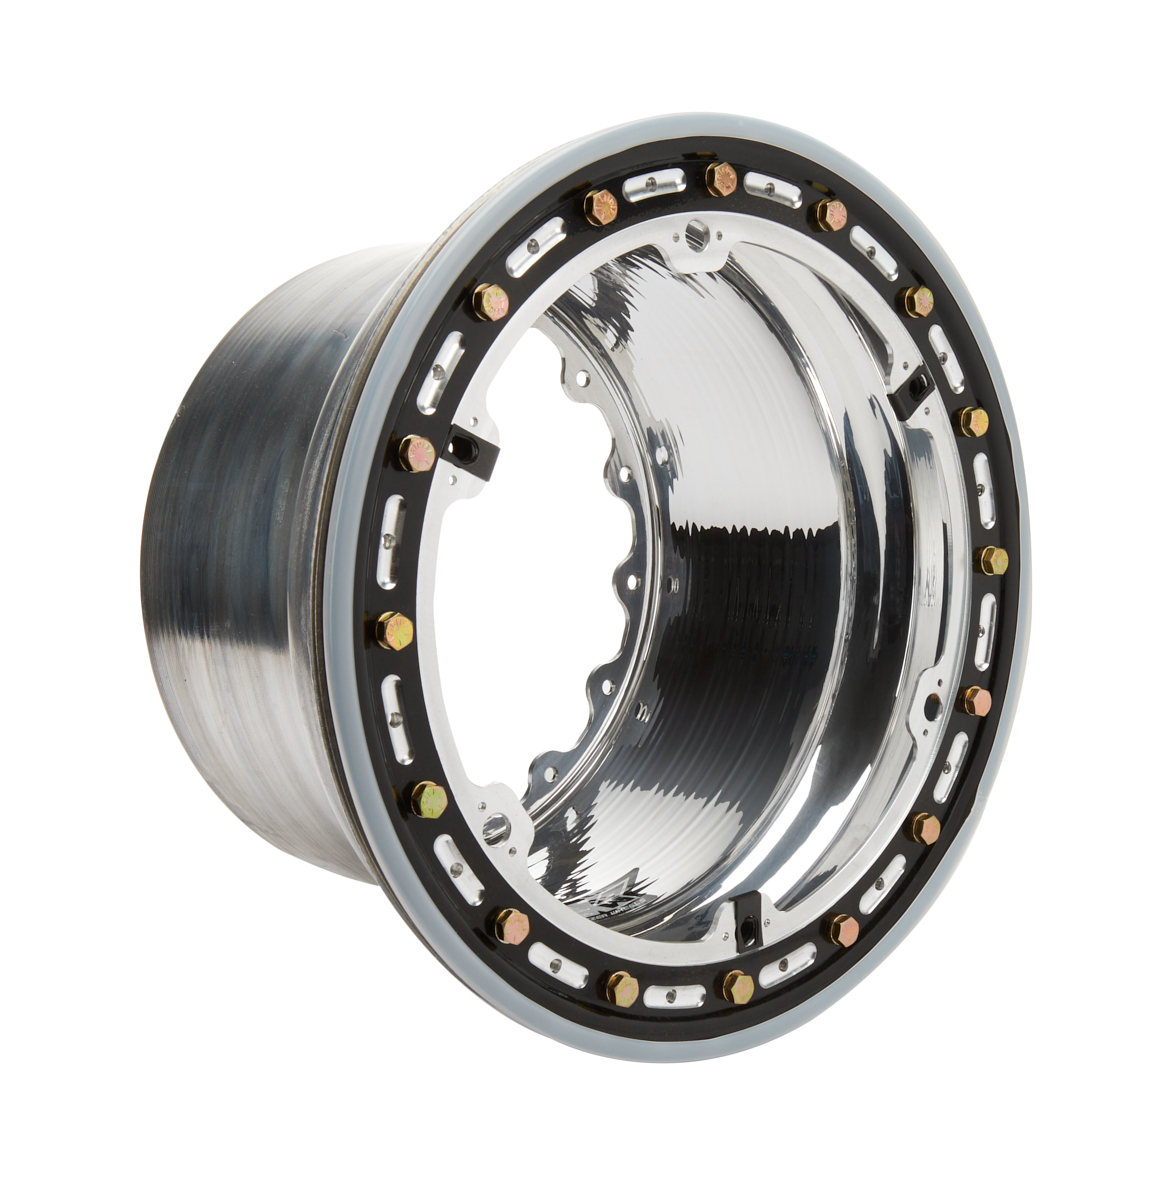 Keizer Aluminum Wheels W159BL Wheel Shell, Matrix Modular, Outer, 15 x 9.00 in, Beadlock, Aluminum, Polished, Keizer Wide 5, Each